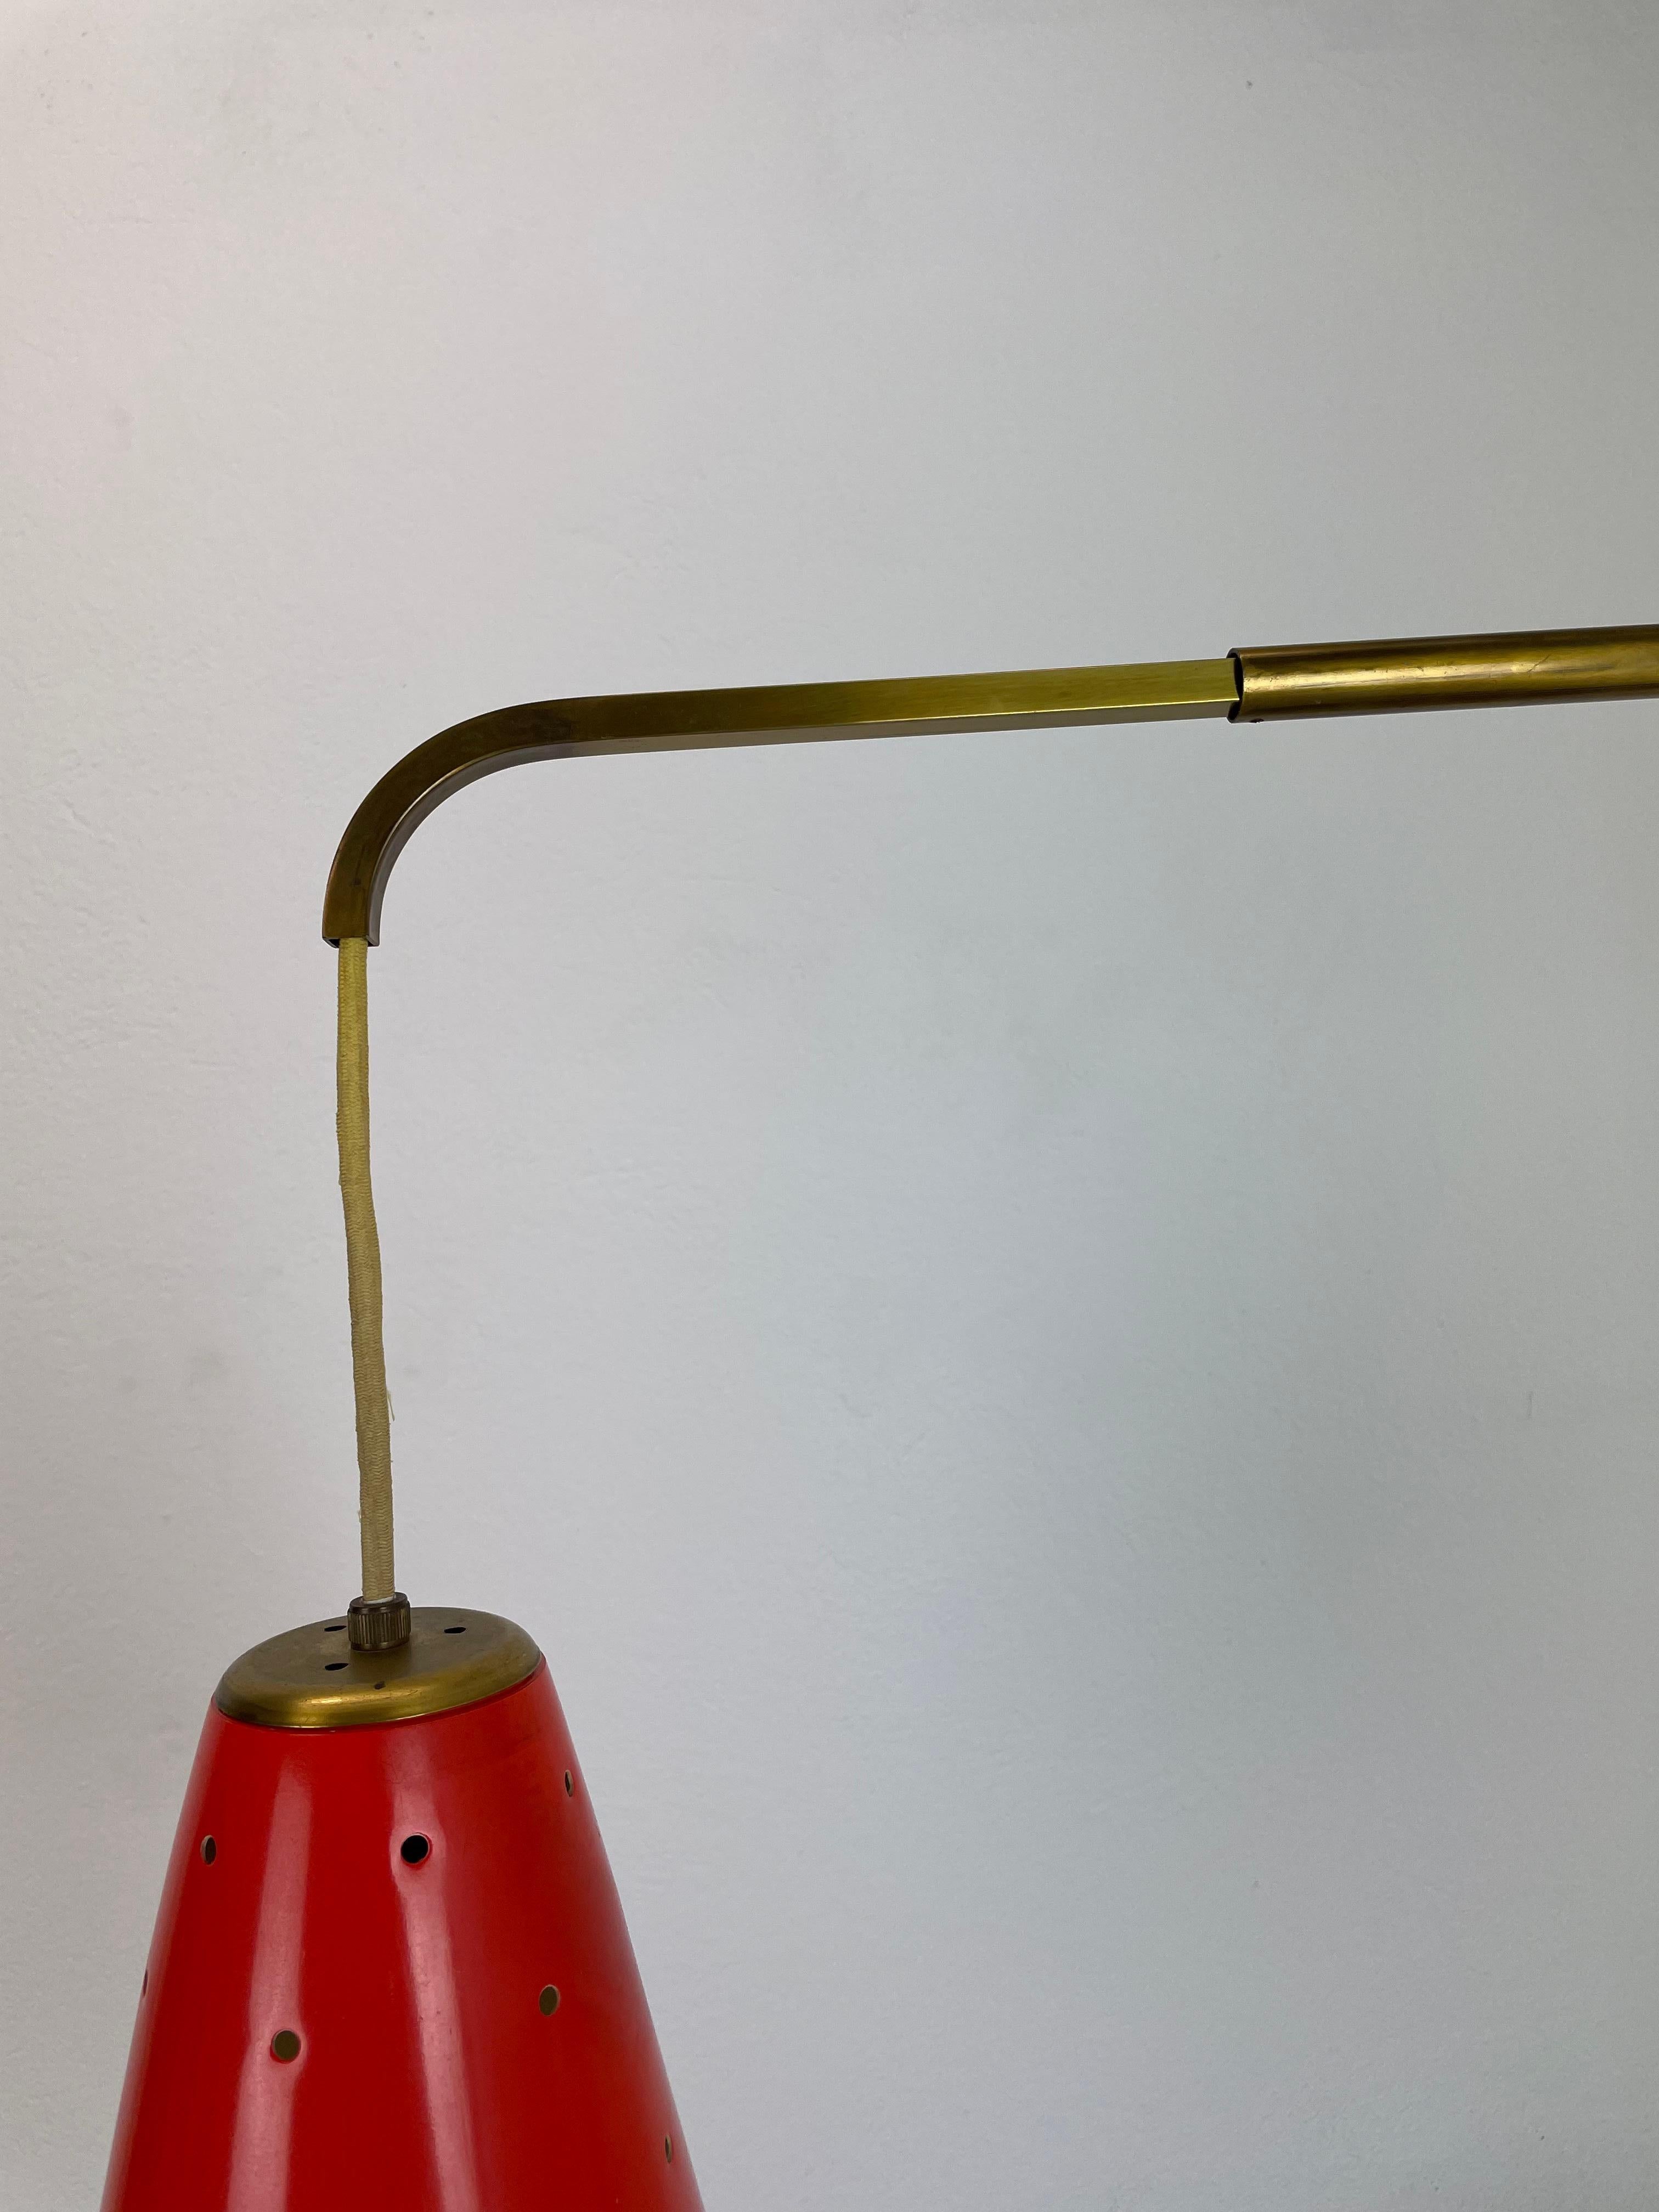 XXL Stilnovo Sarfatti Style Red Counter Weight Brass Wall Light Italy, 1950s For Sale 4